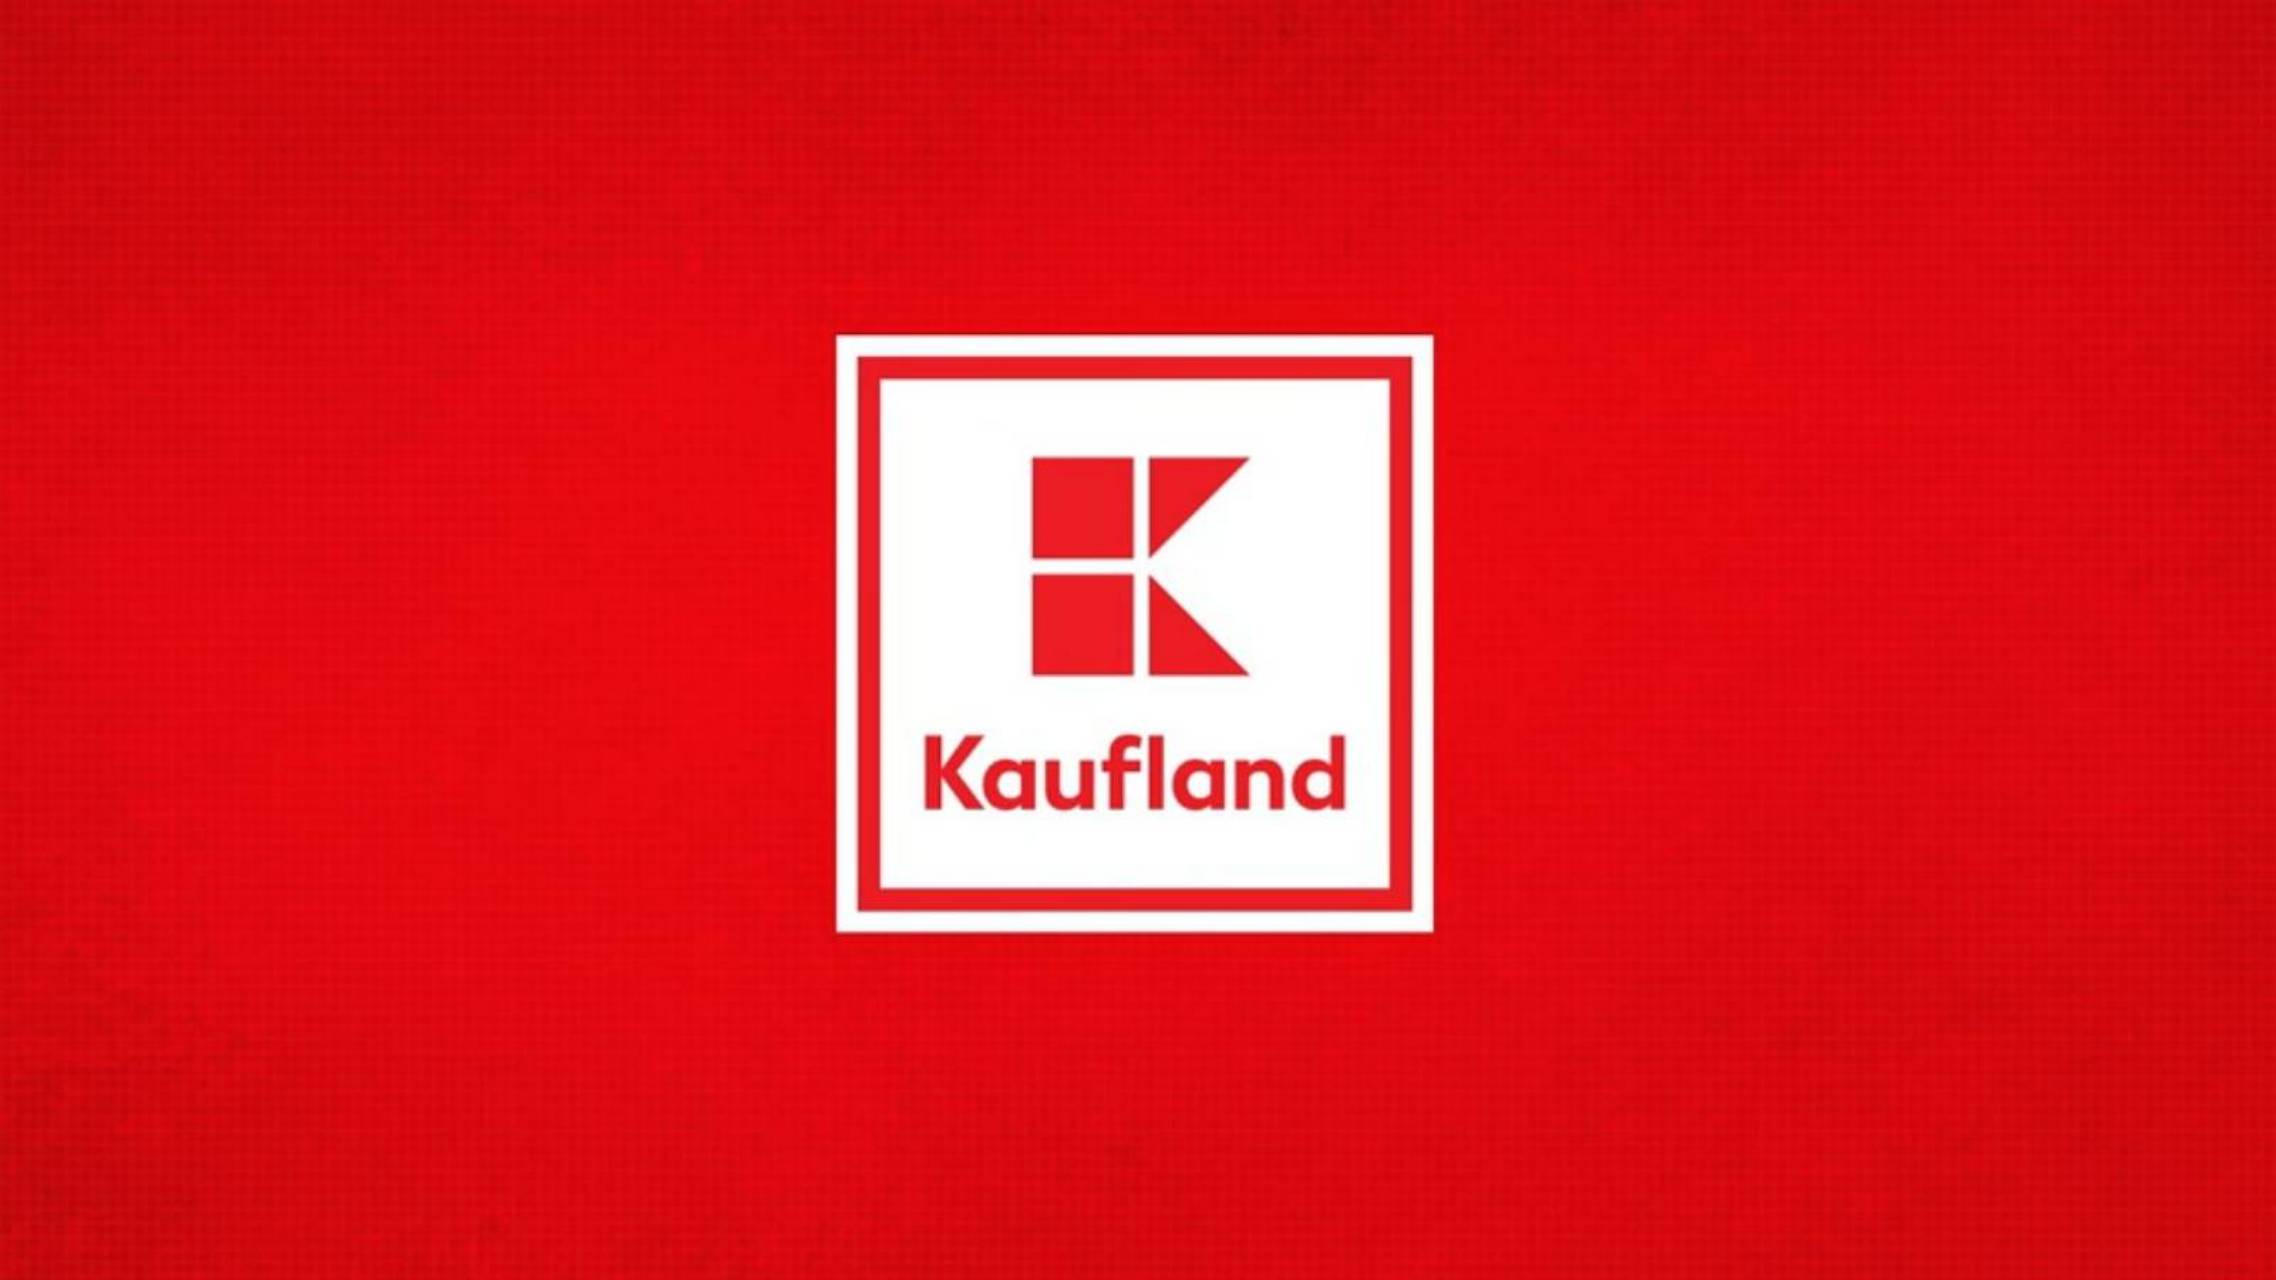 Kaufland now